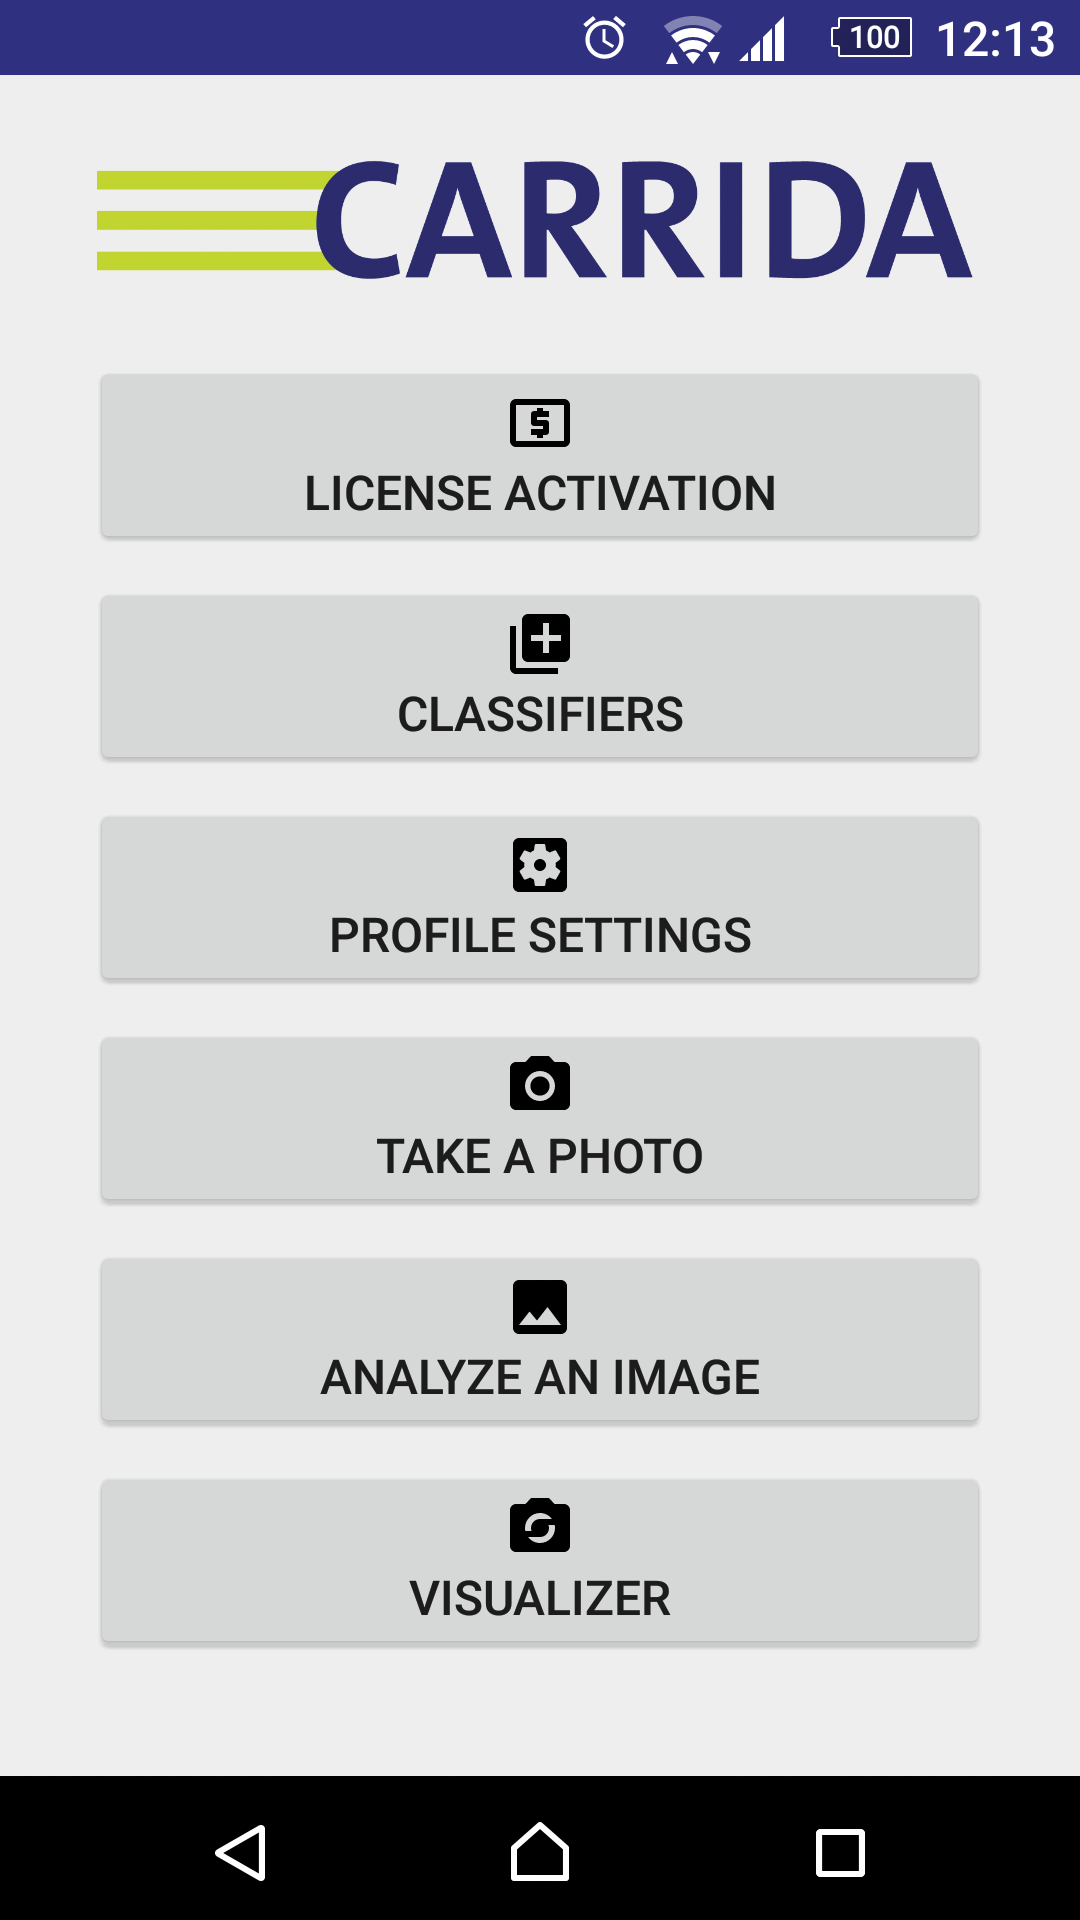 ./images/screenshot_1_menu.png